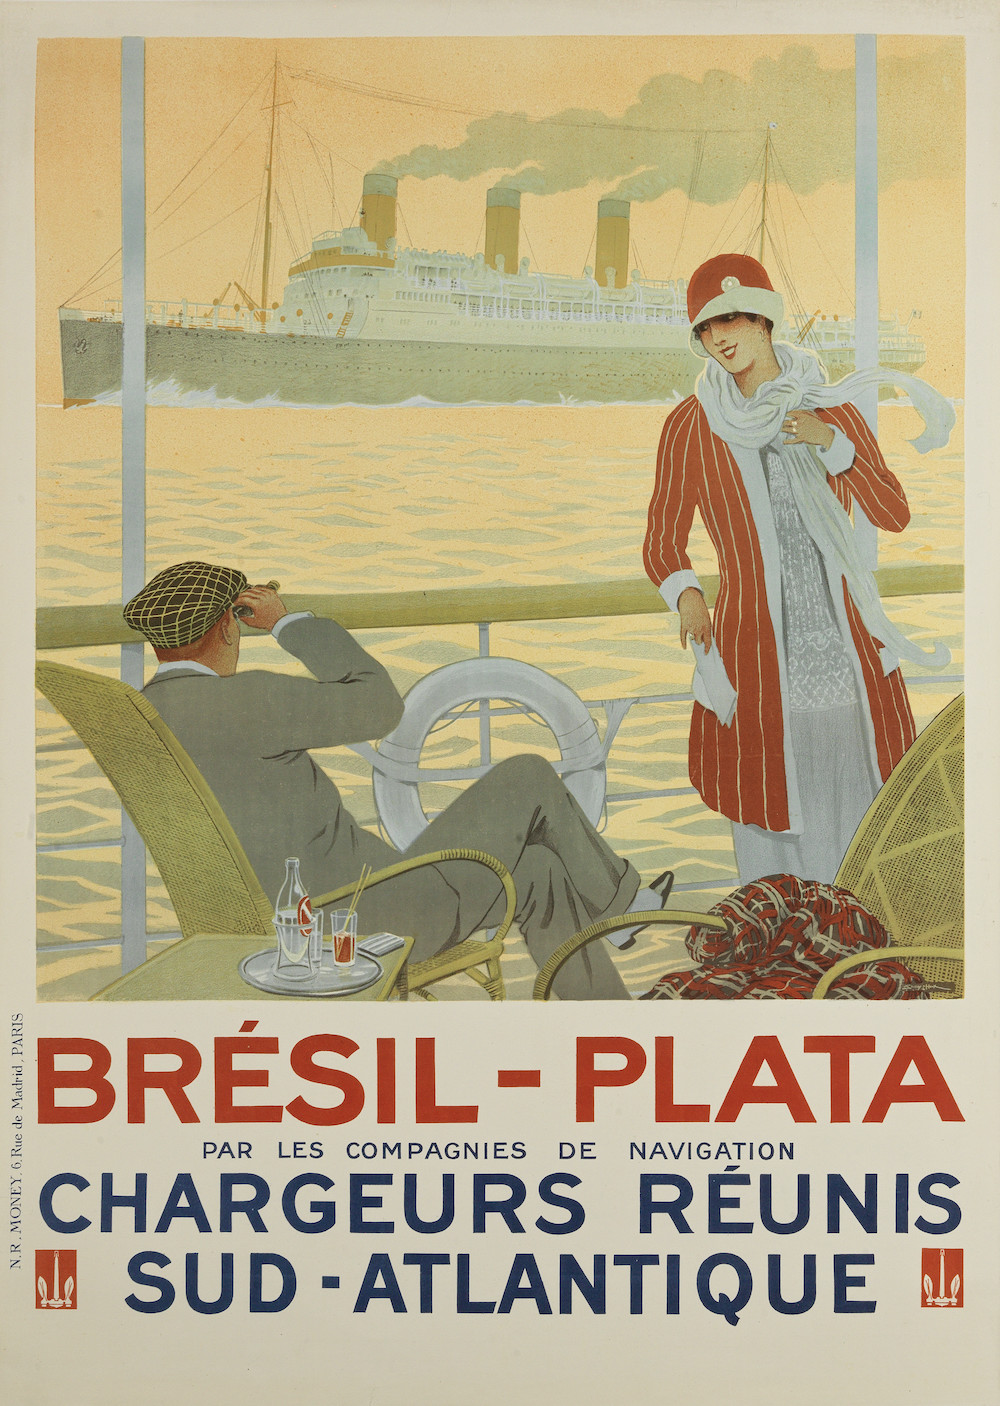 Vintage travel poster designed by Georges Taboureau